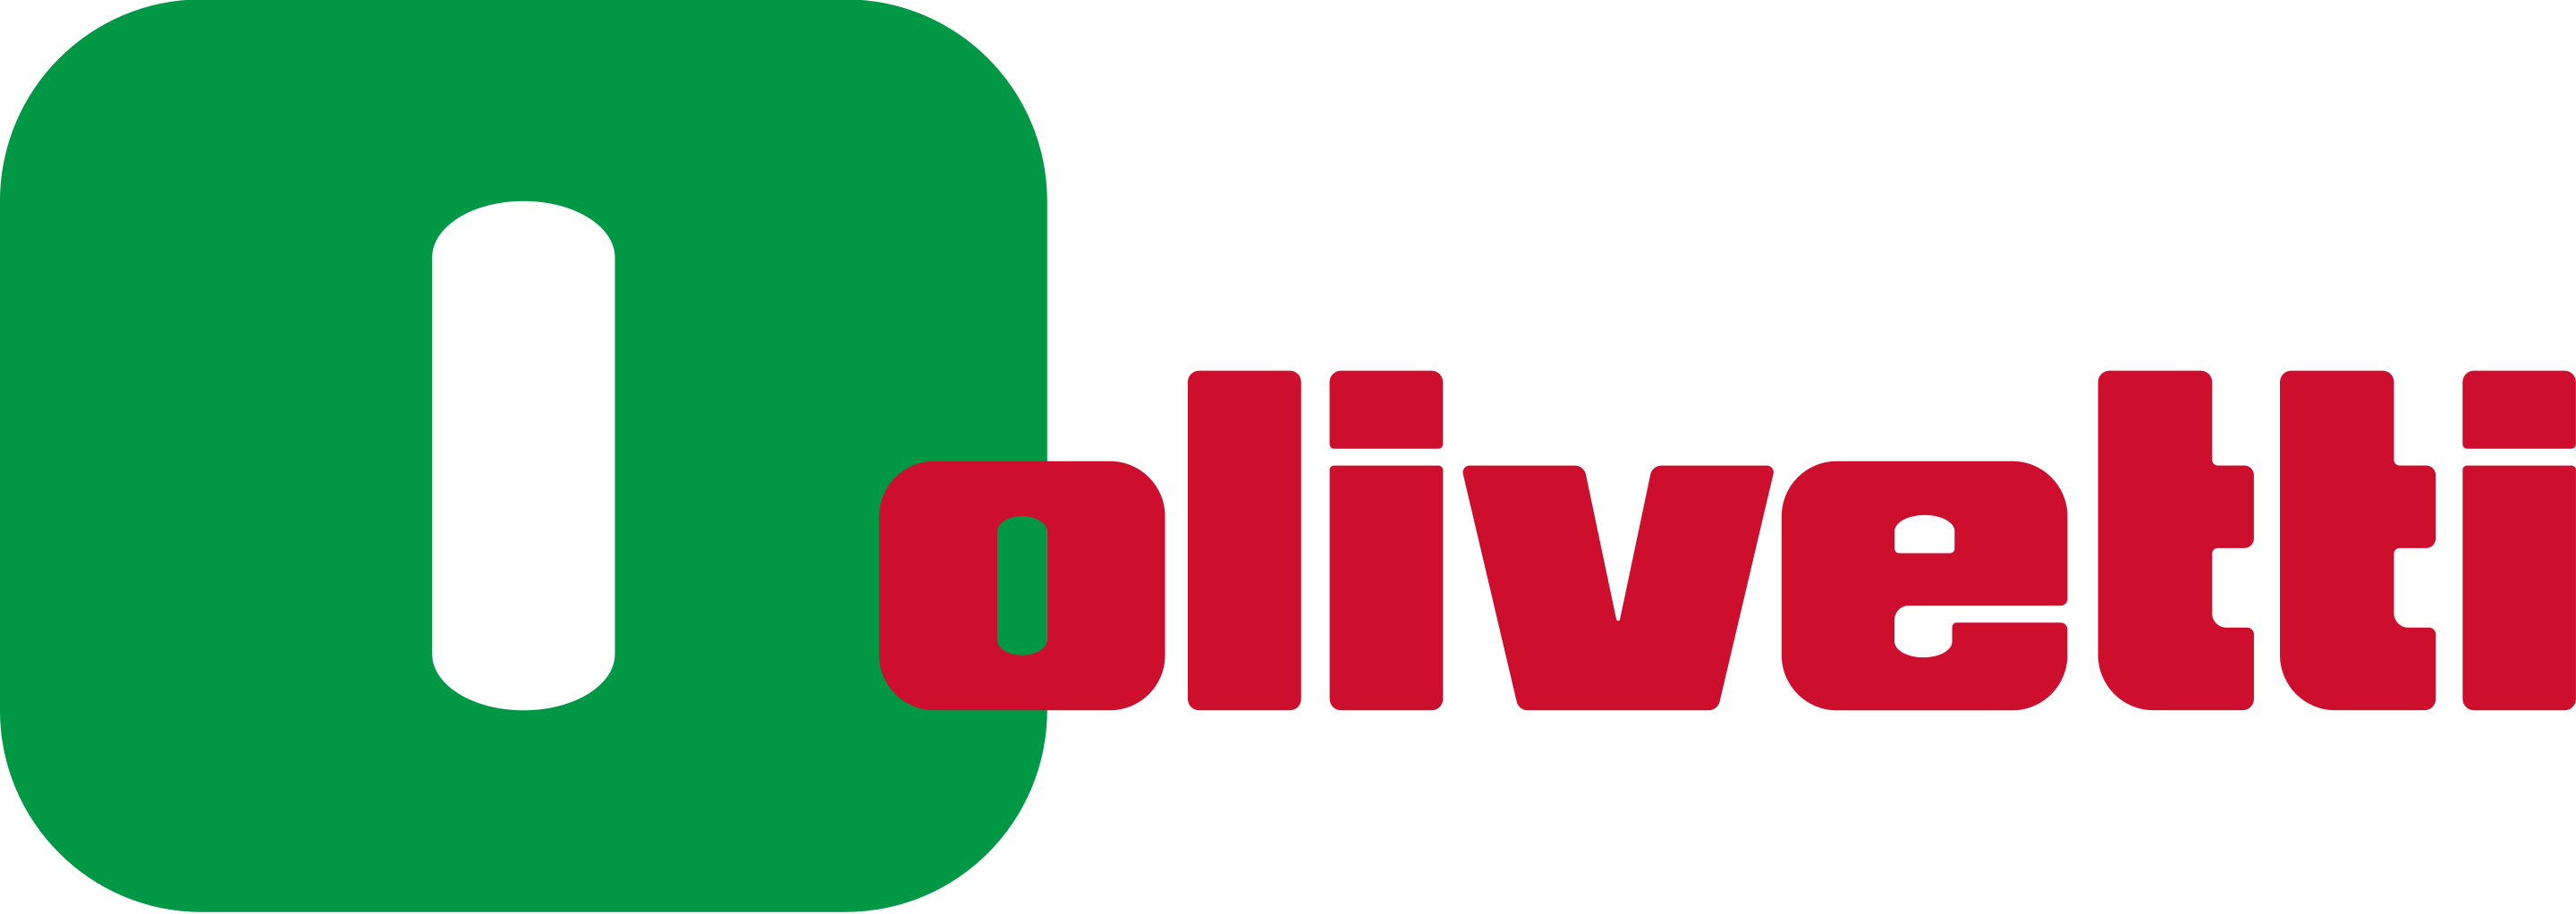 Telecom Italia - Olivetti S.p.A.